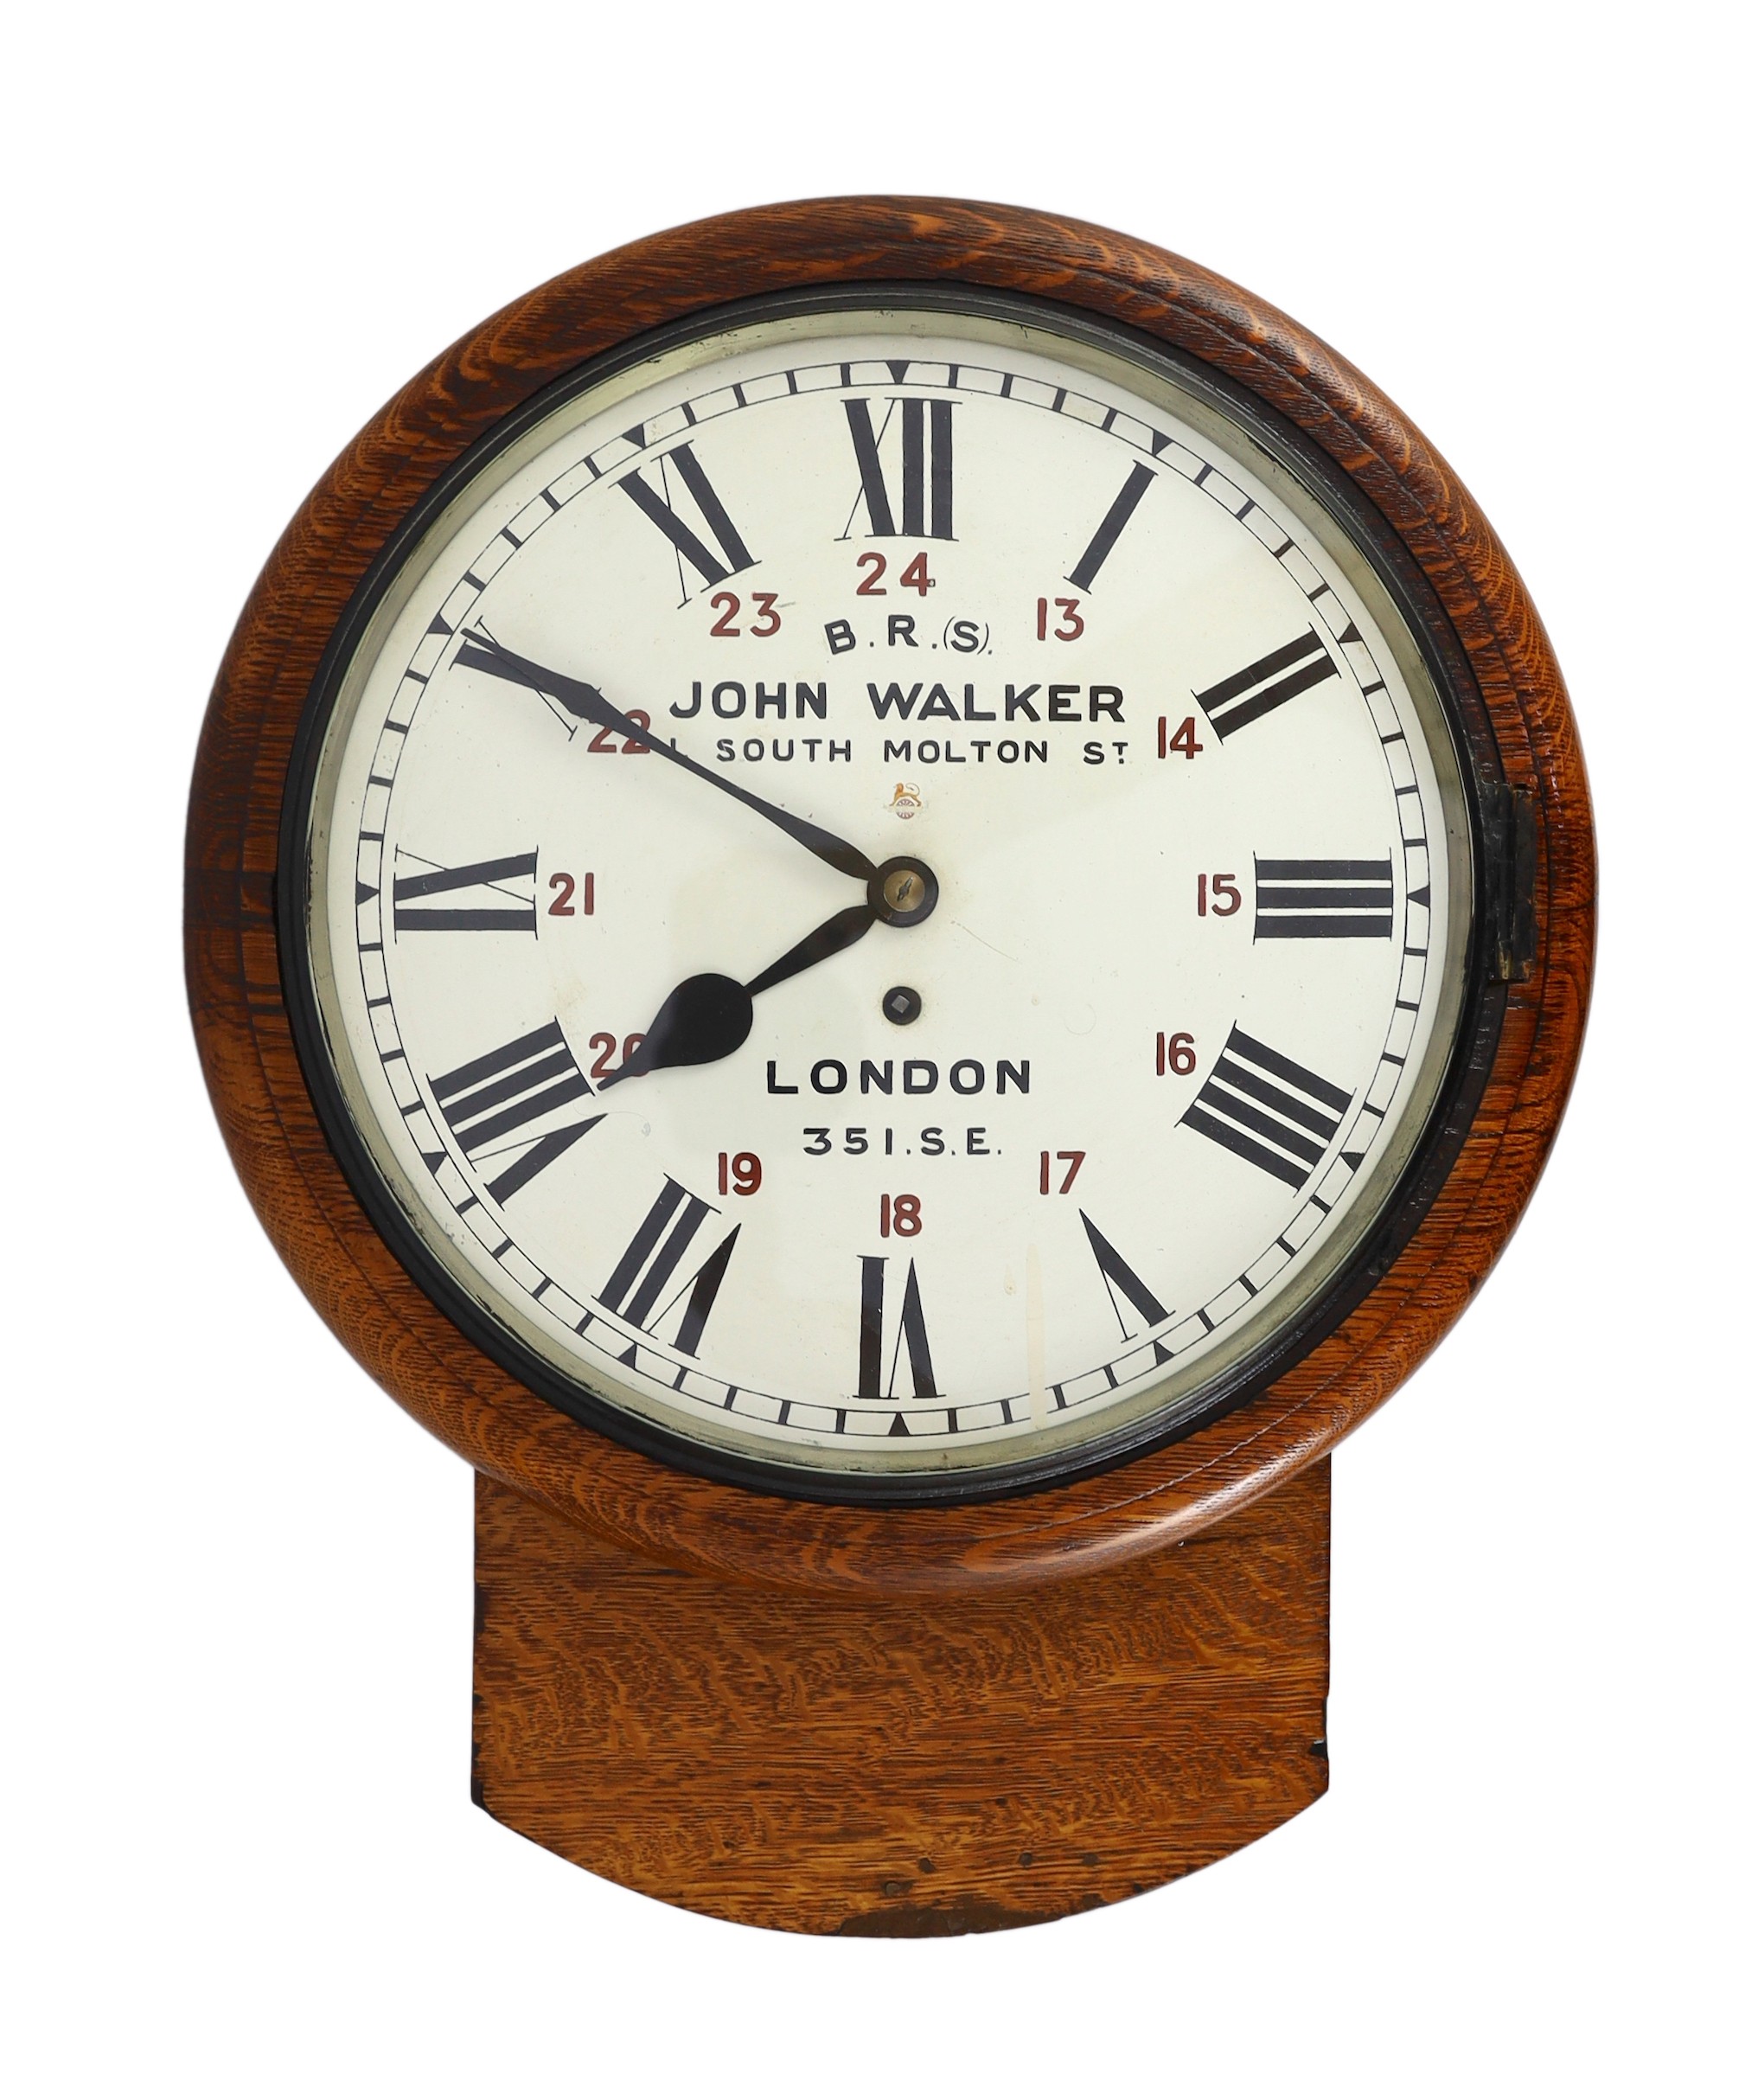 John Walker, South Milton St, London. An Edwardian oak cased drop dial wall timepiece with British